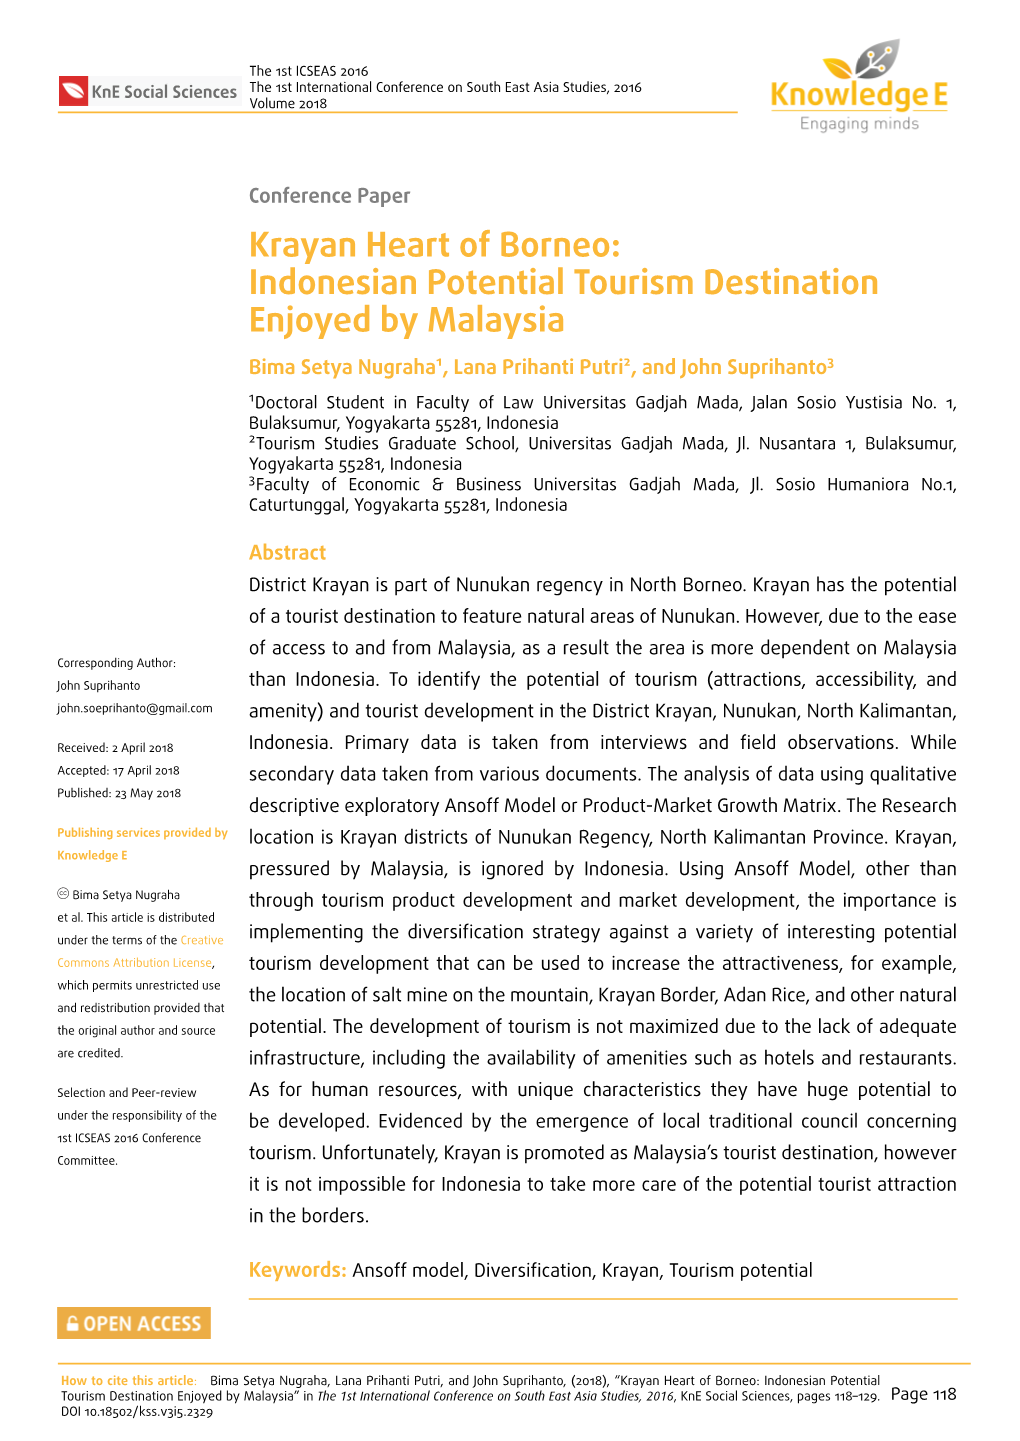 Krayan Heart of Borneo: Indonesian Potential Tourism Destination